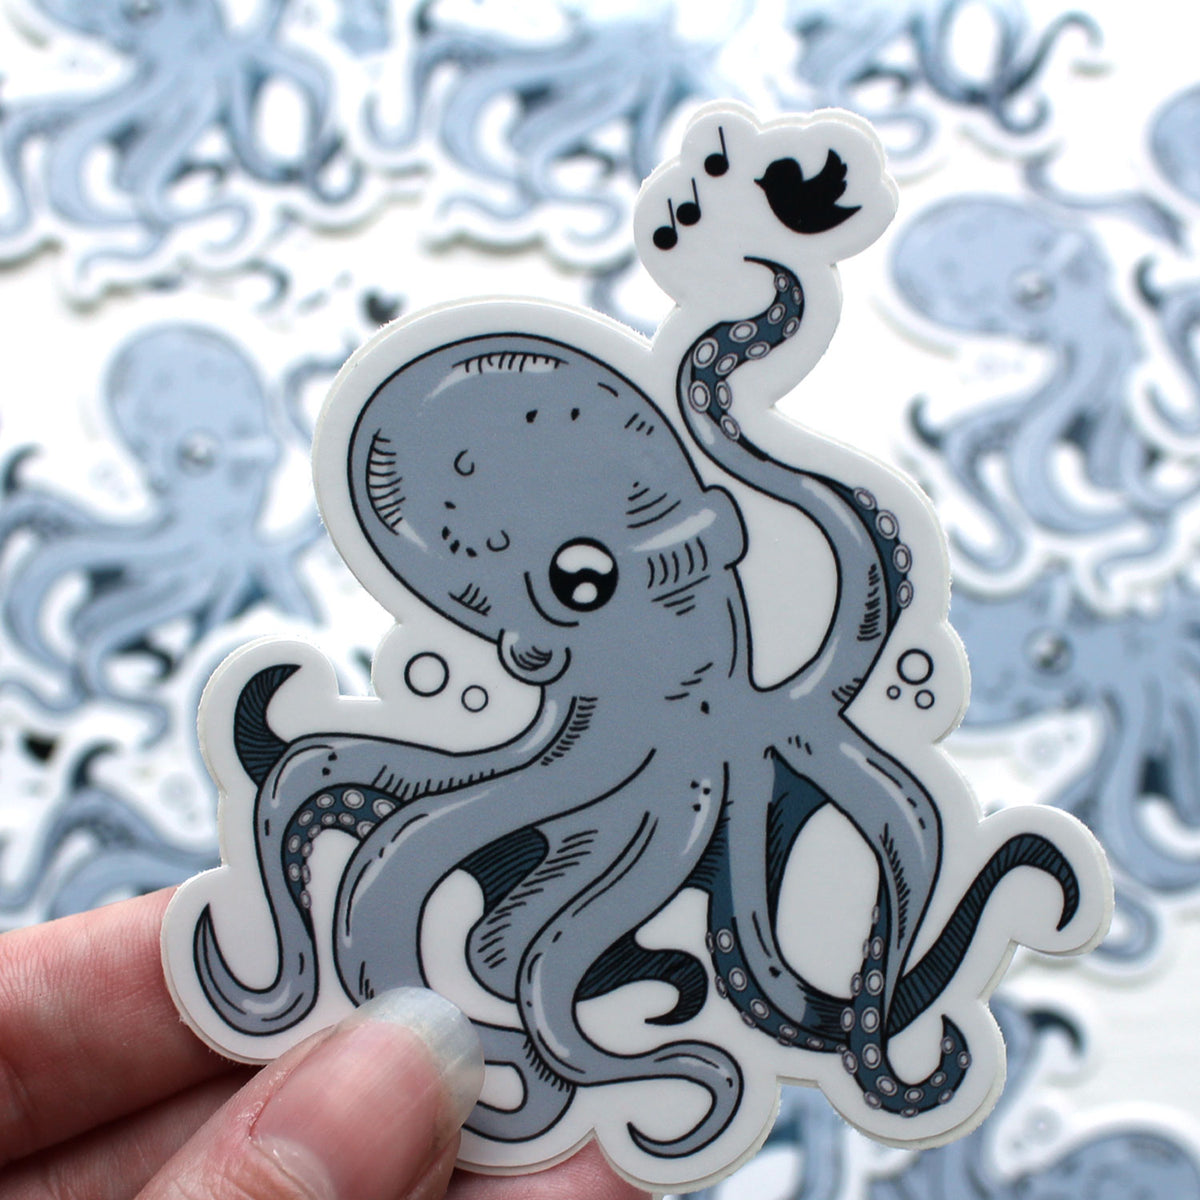 Cute Octopus and Friend Sticker